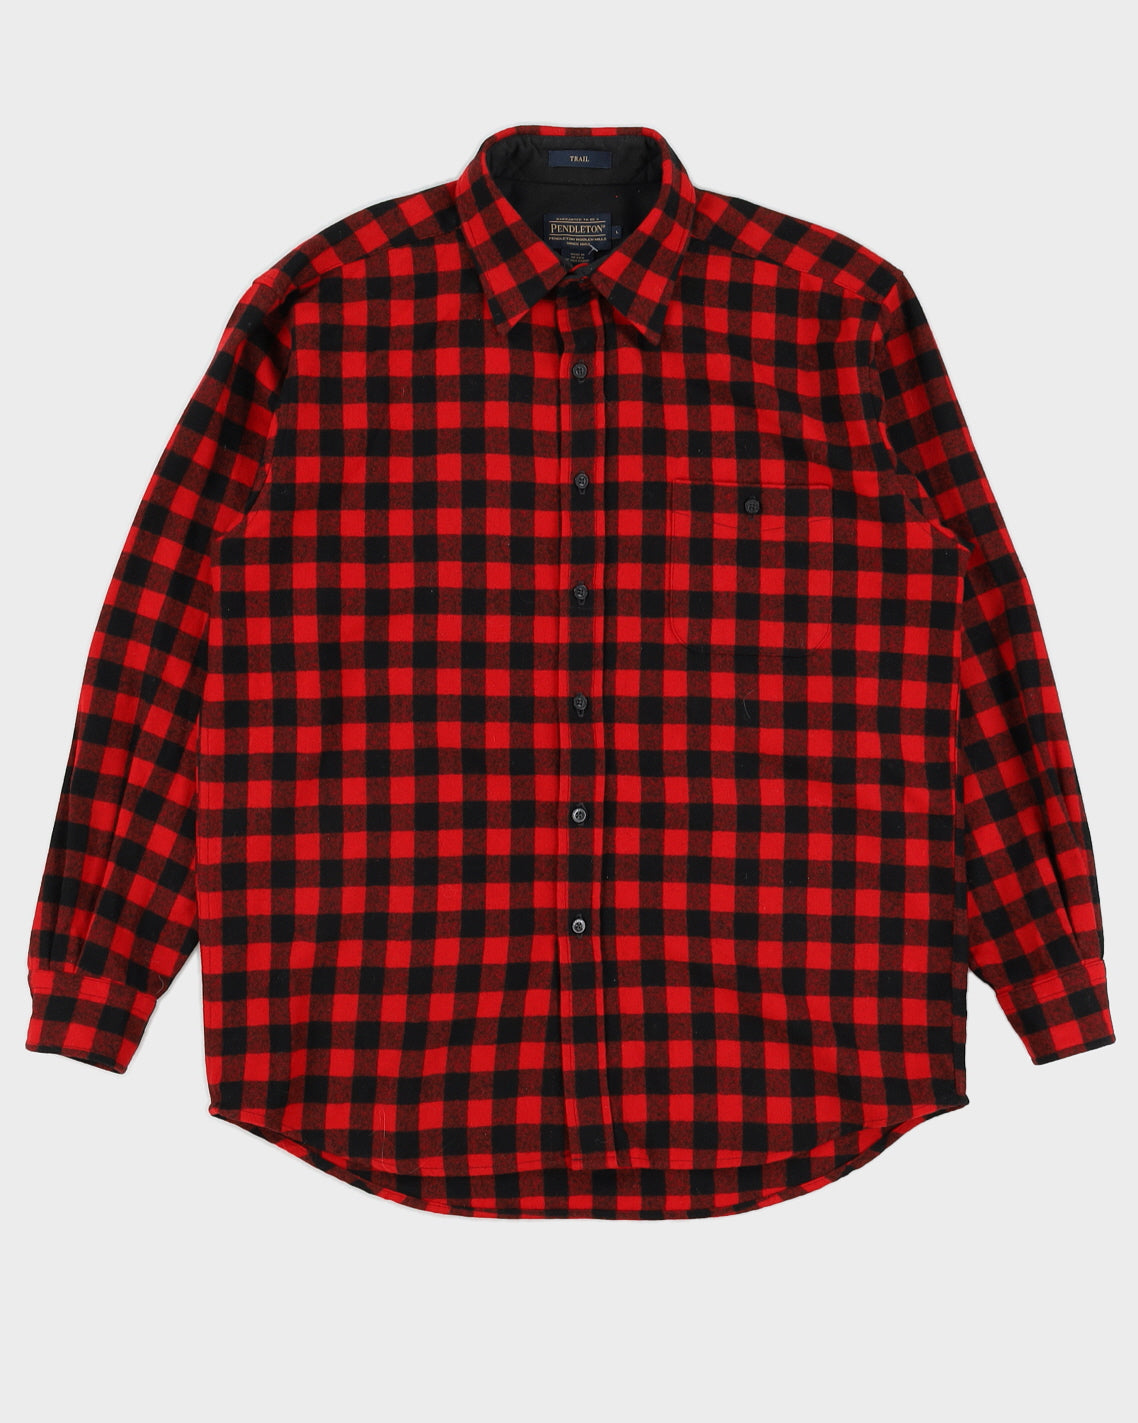 Pendleton Red Wool Flannel Shirt - L